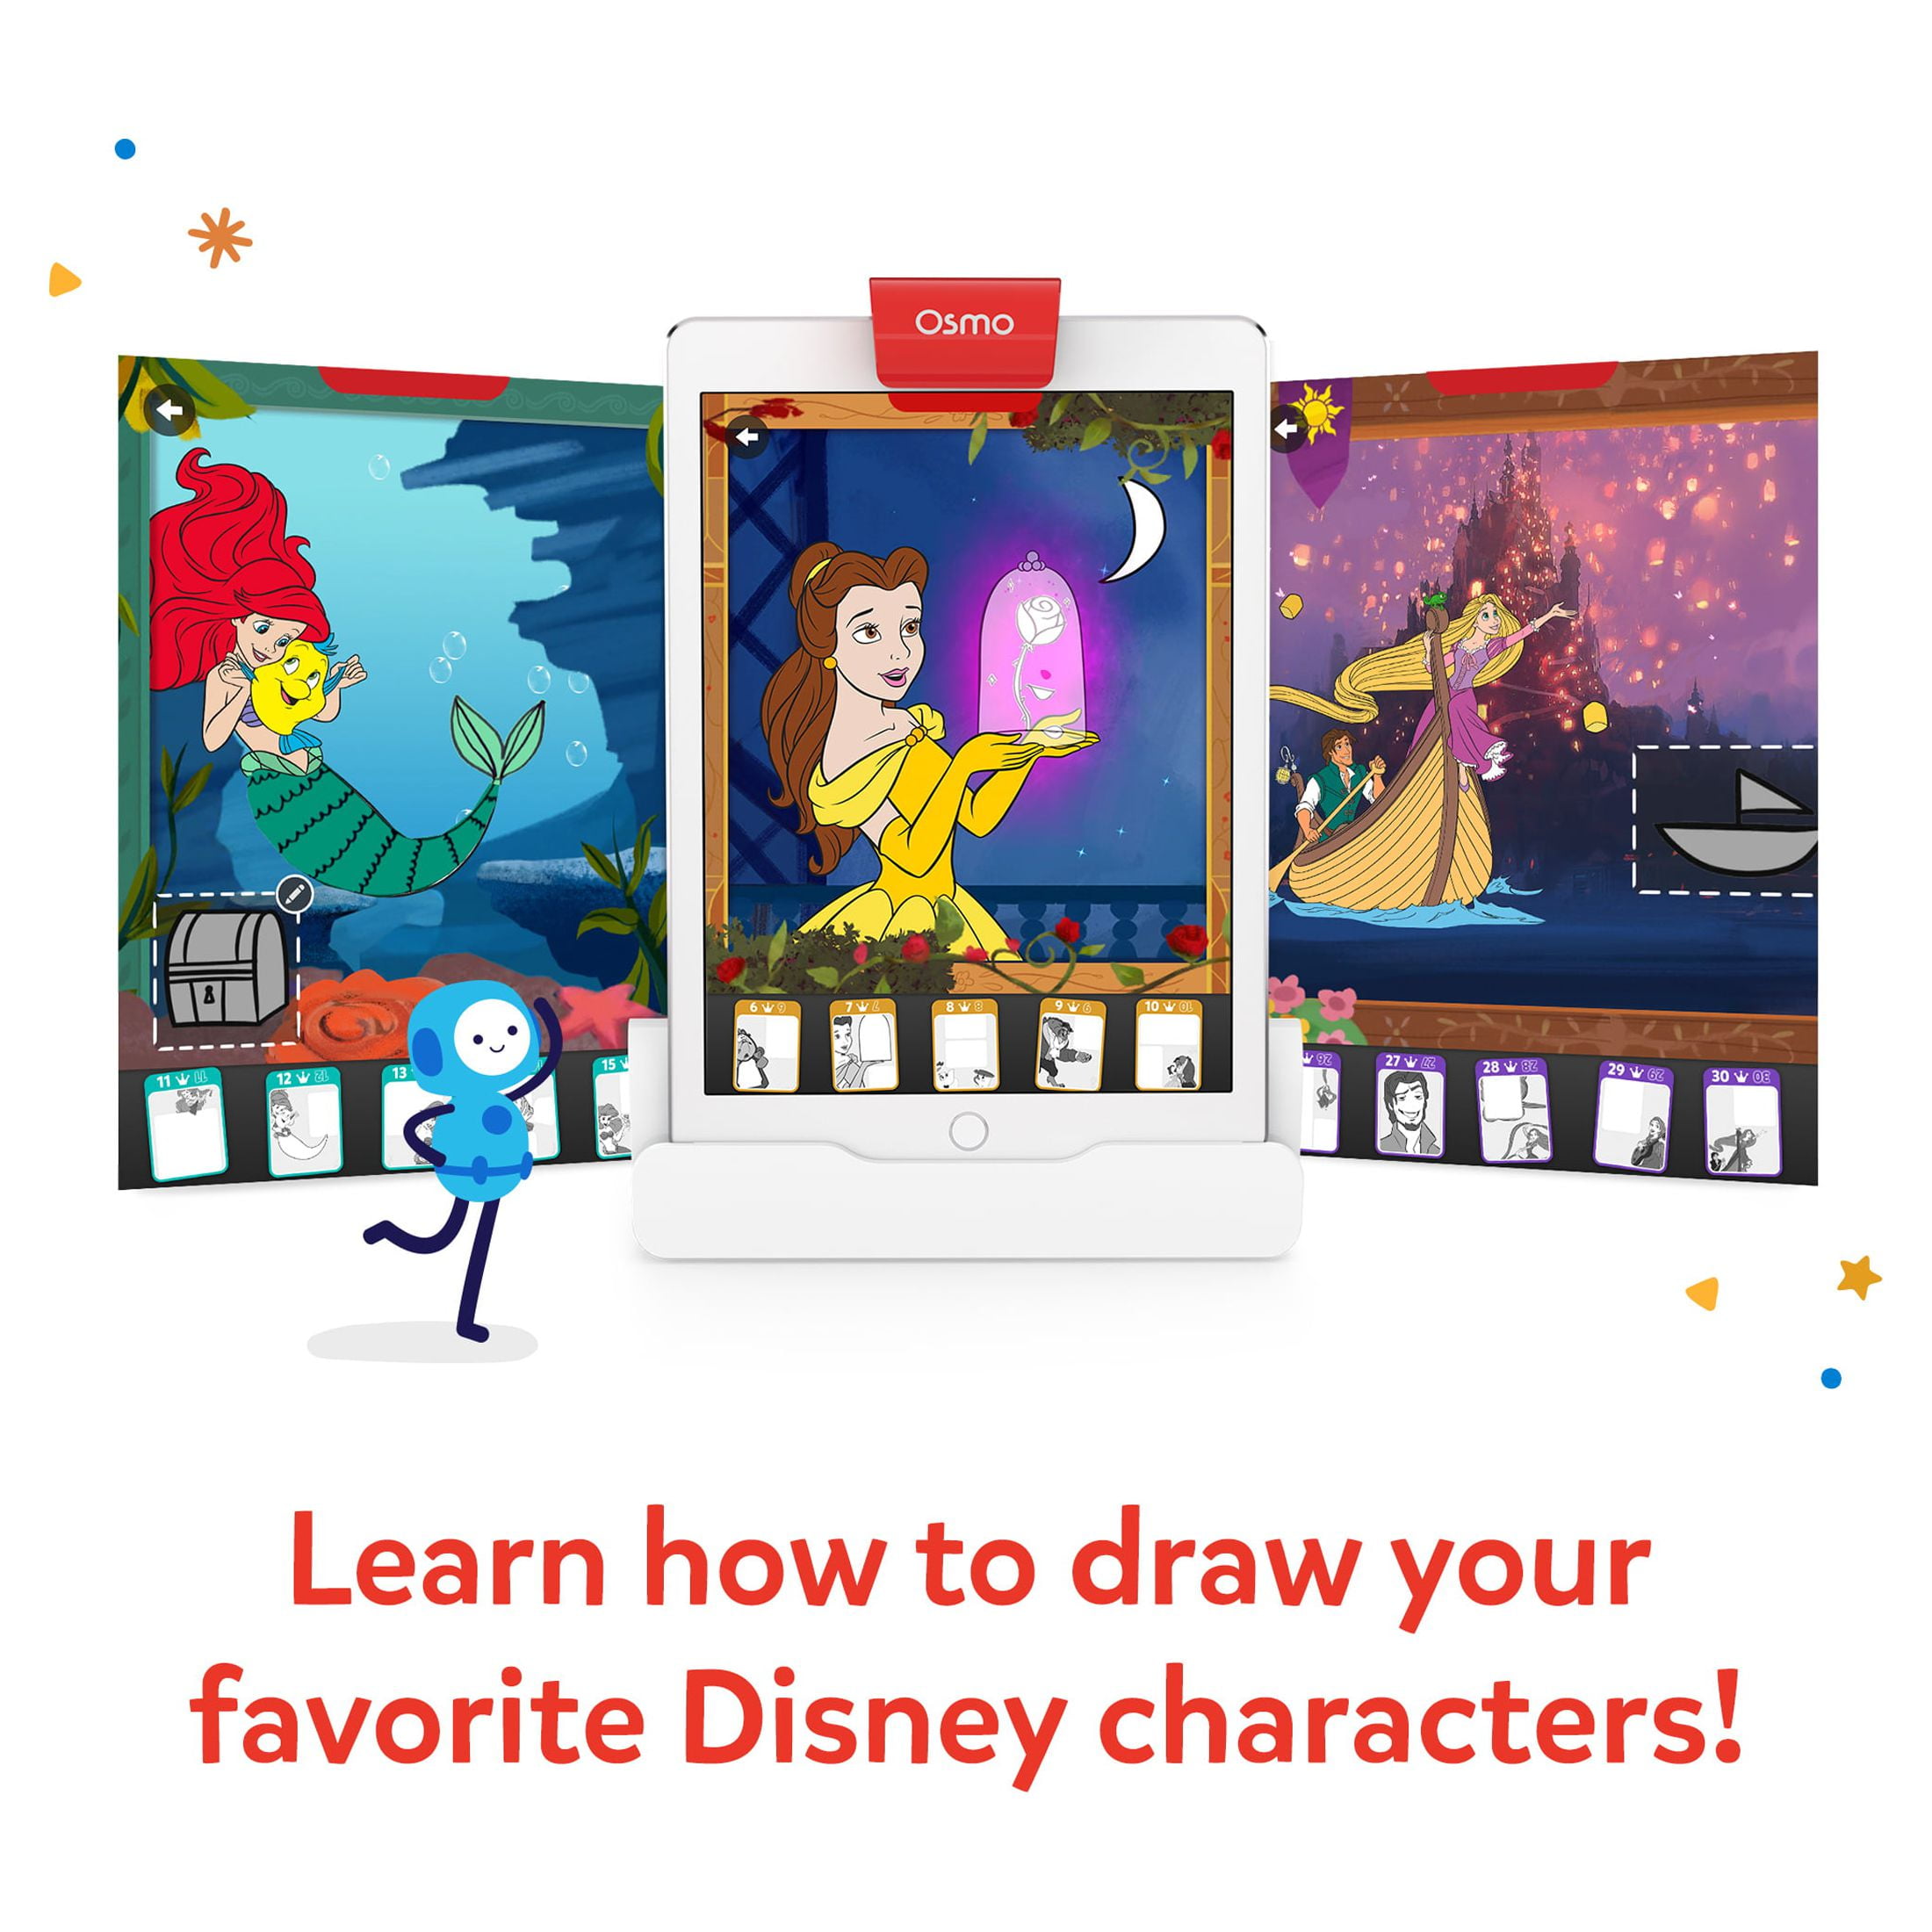 Osmo - Super Studio Disney Princess Starter Kit for iPad, Ages 5